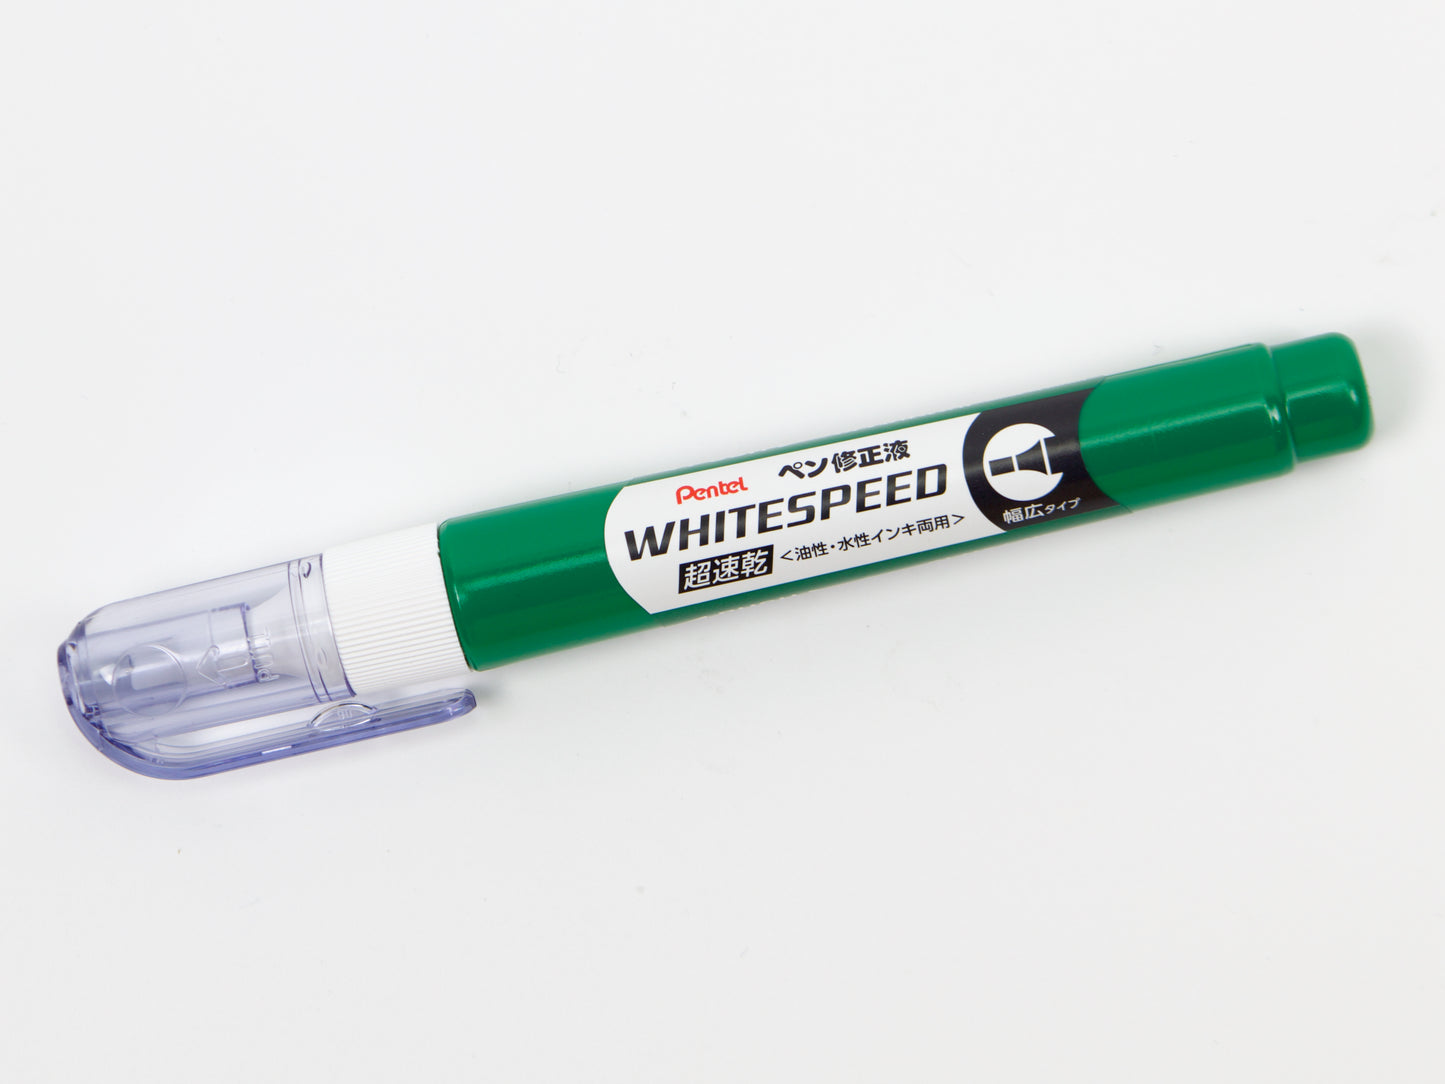 Whitespeed Correction Pen